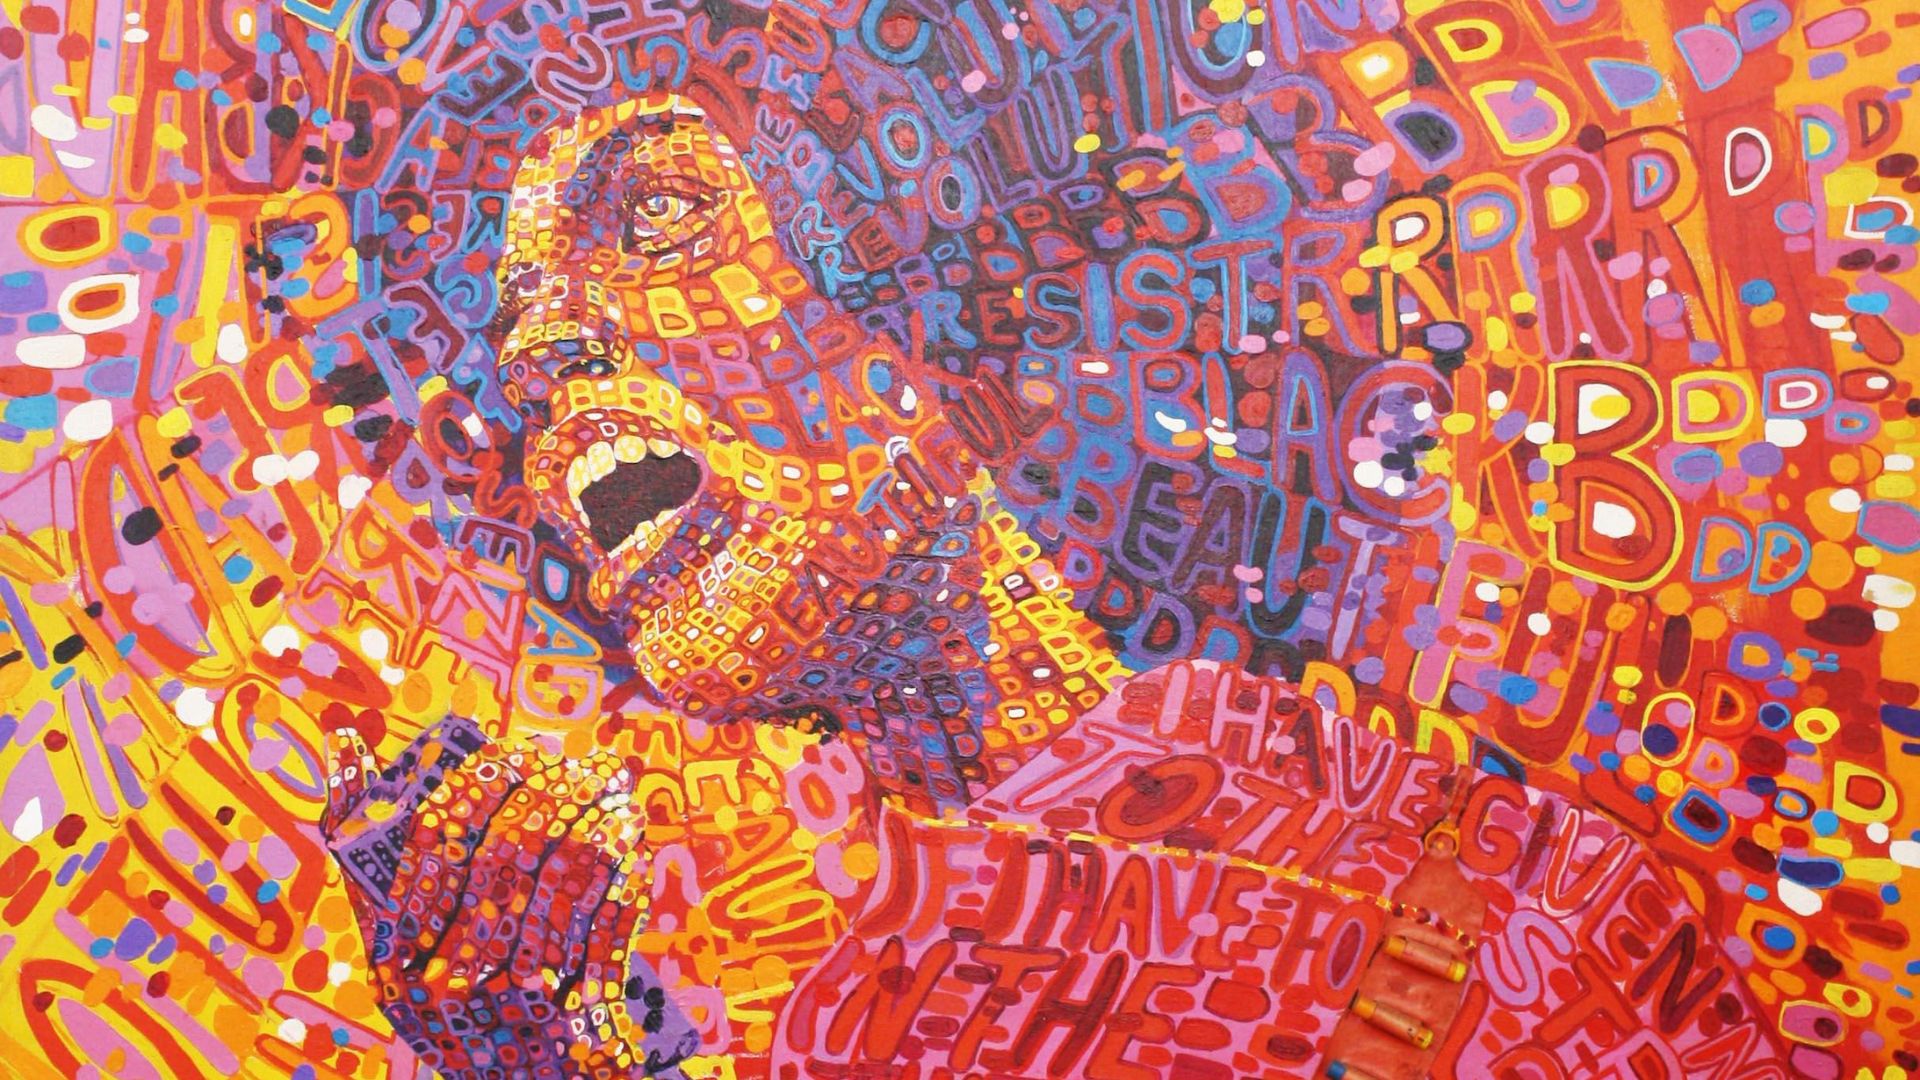 Angela Davis abstract painting